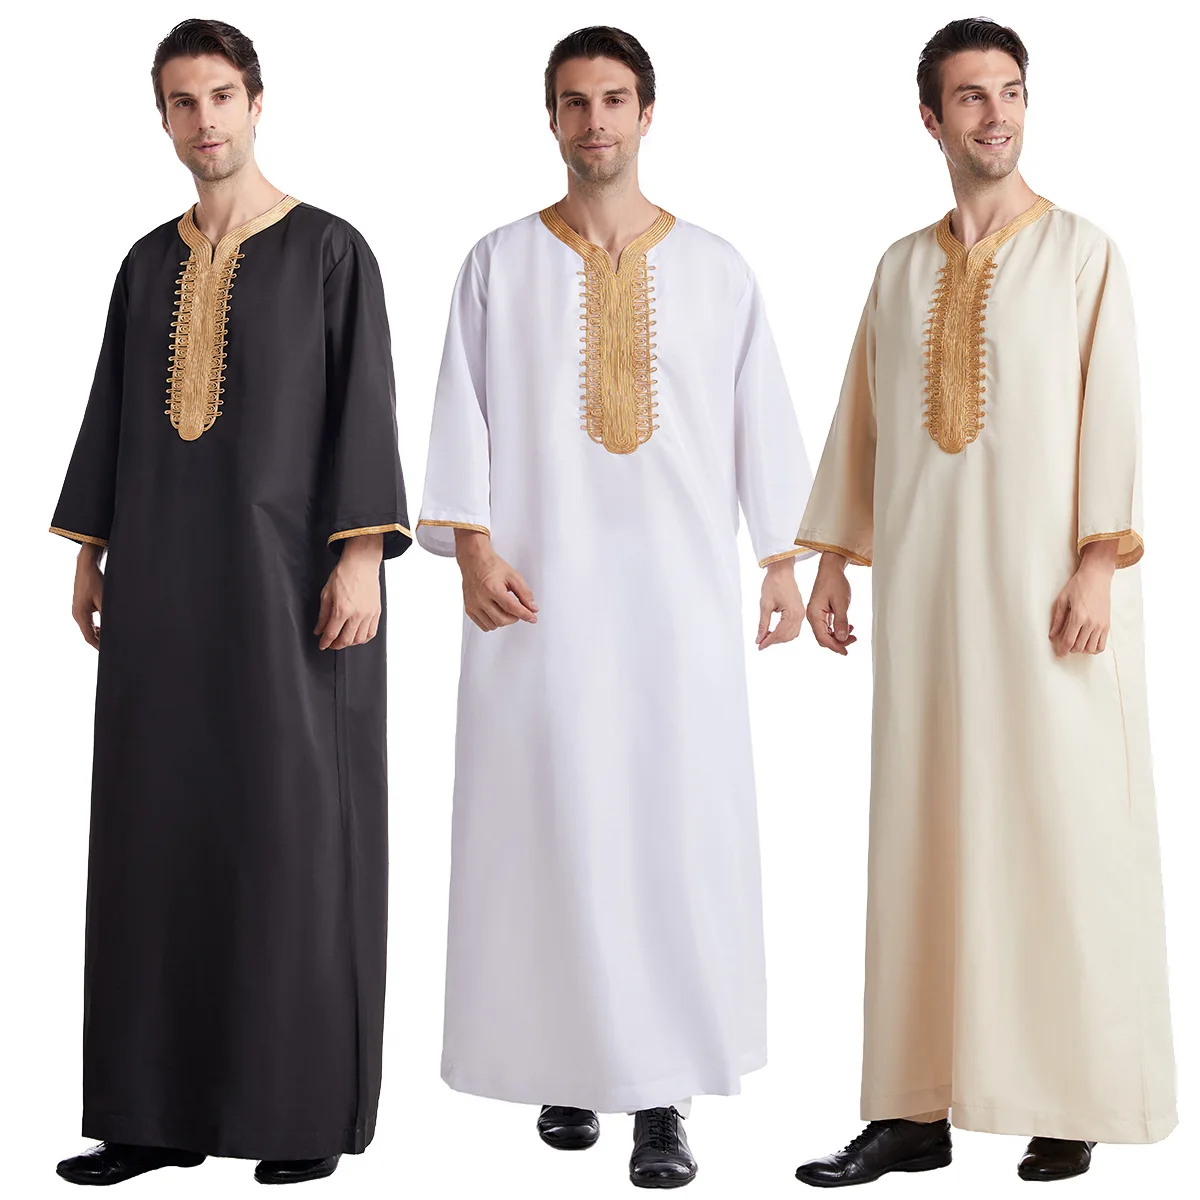 Men Muslim Dress Jubba Thobe Prayer Islamic Clothing Arabic Kaftan Solid Short Sleeve Loose Robes Abaya Middle East Plus Size